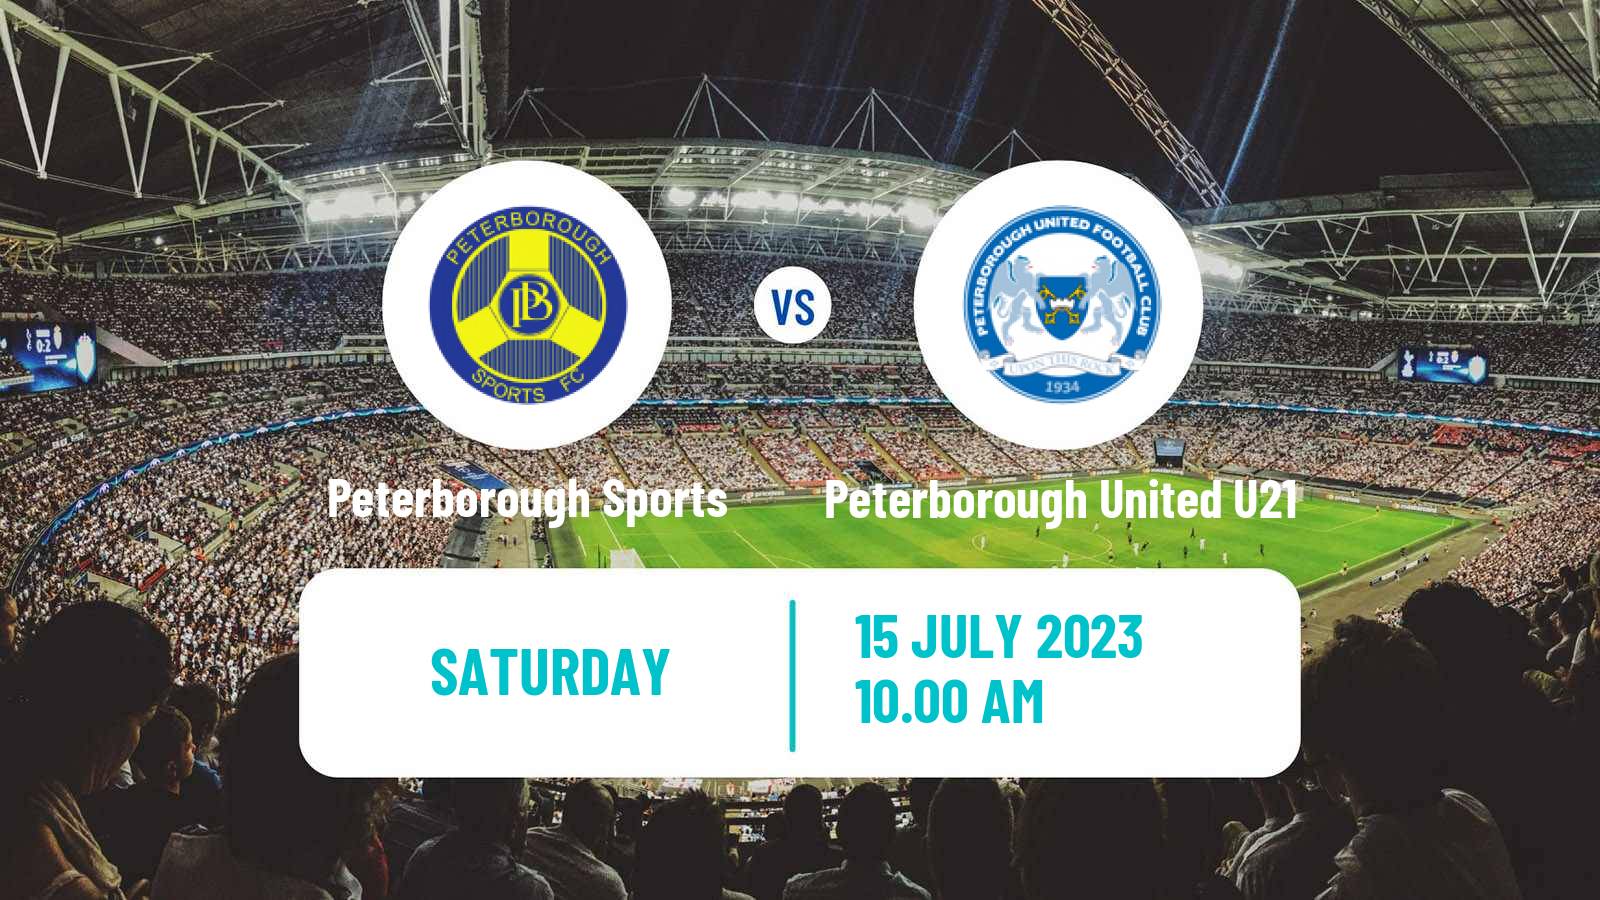 Soccer Club Friendly Peterborough Sports - Peterborough United U21